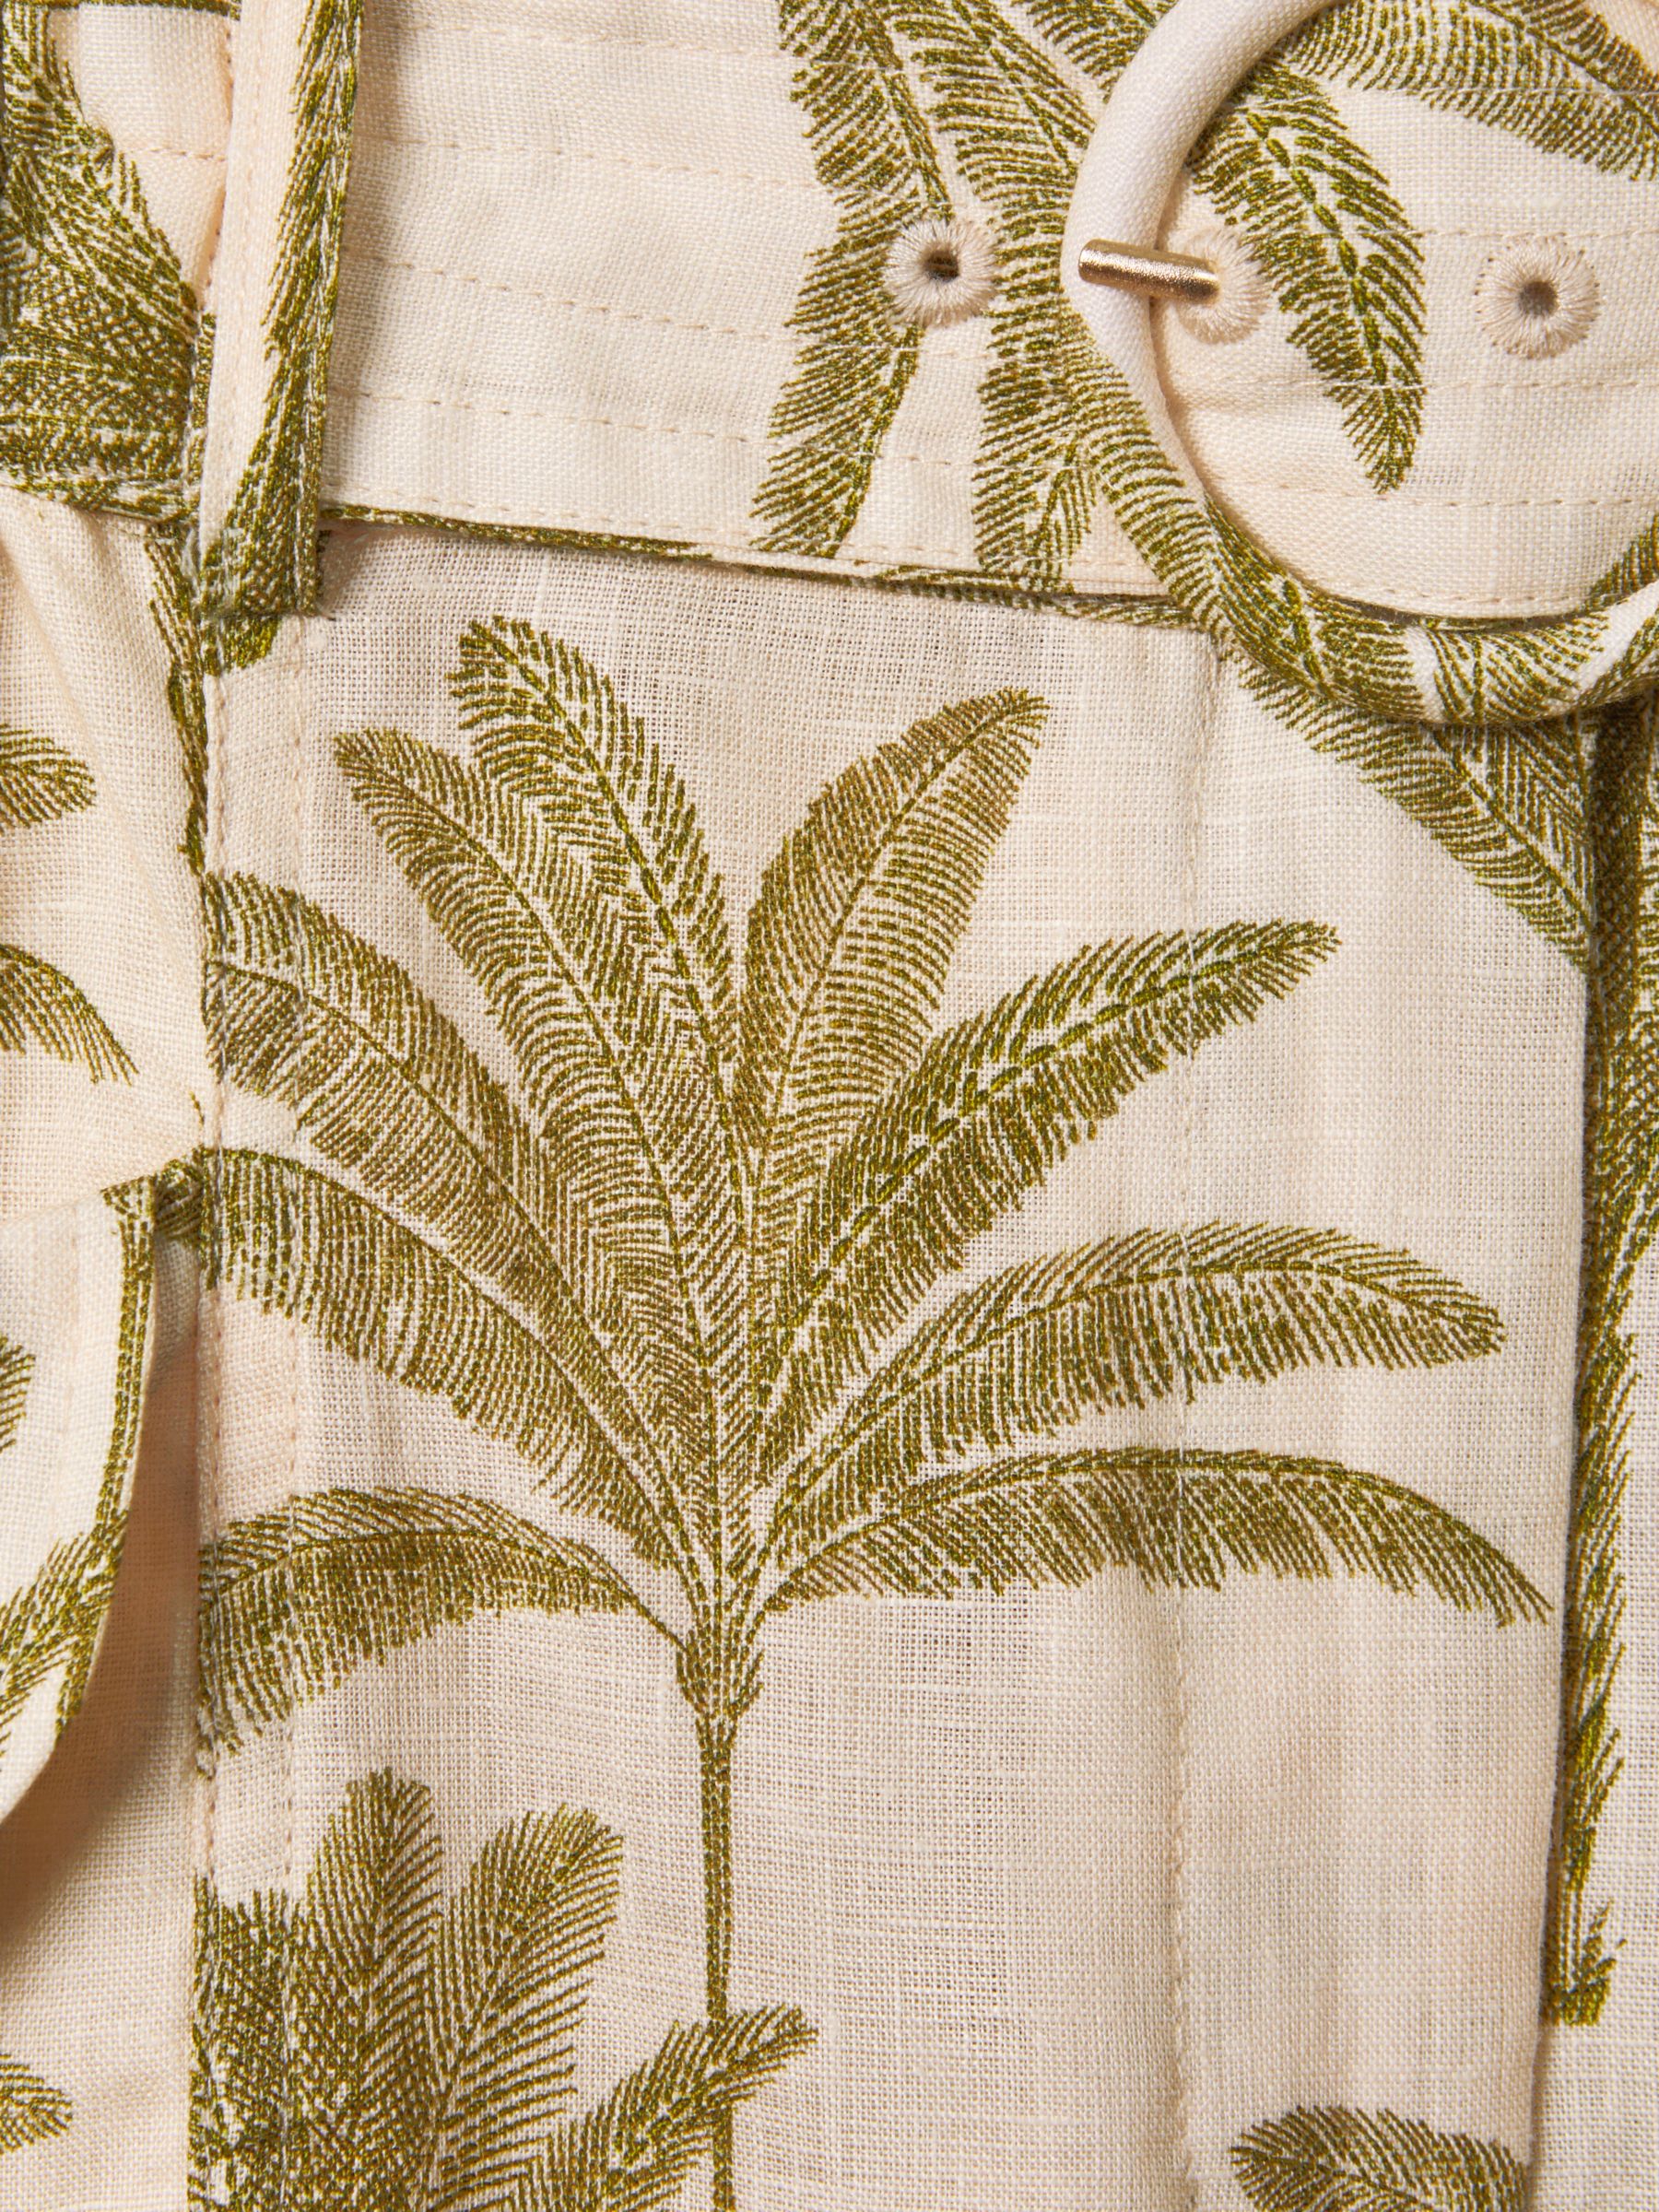 Reiss Cali Palm Print Linen Shorts, Stone/Khaki, 6